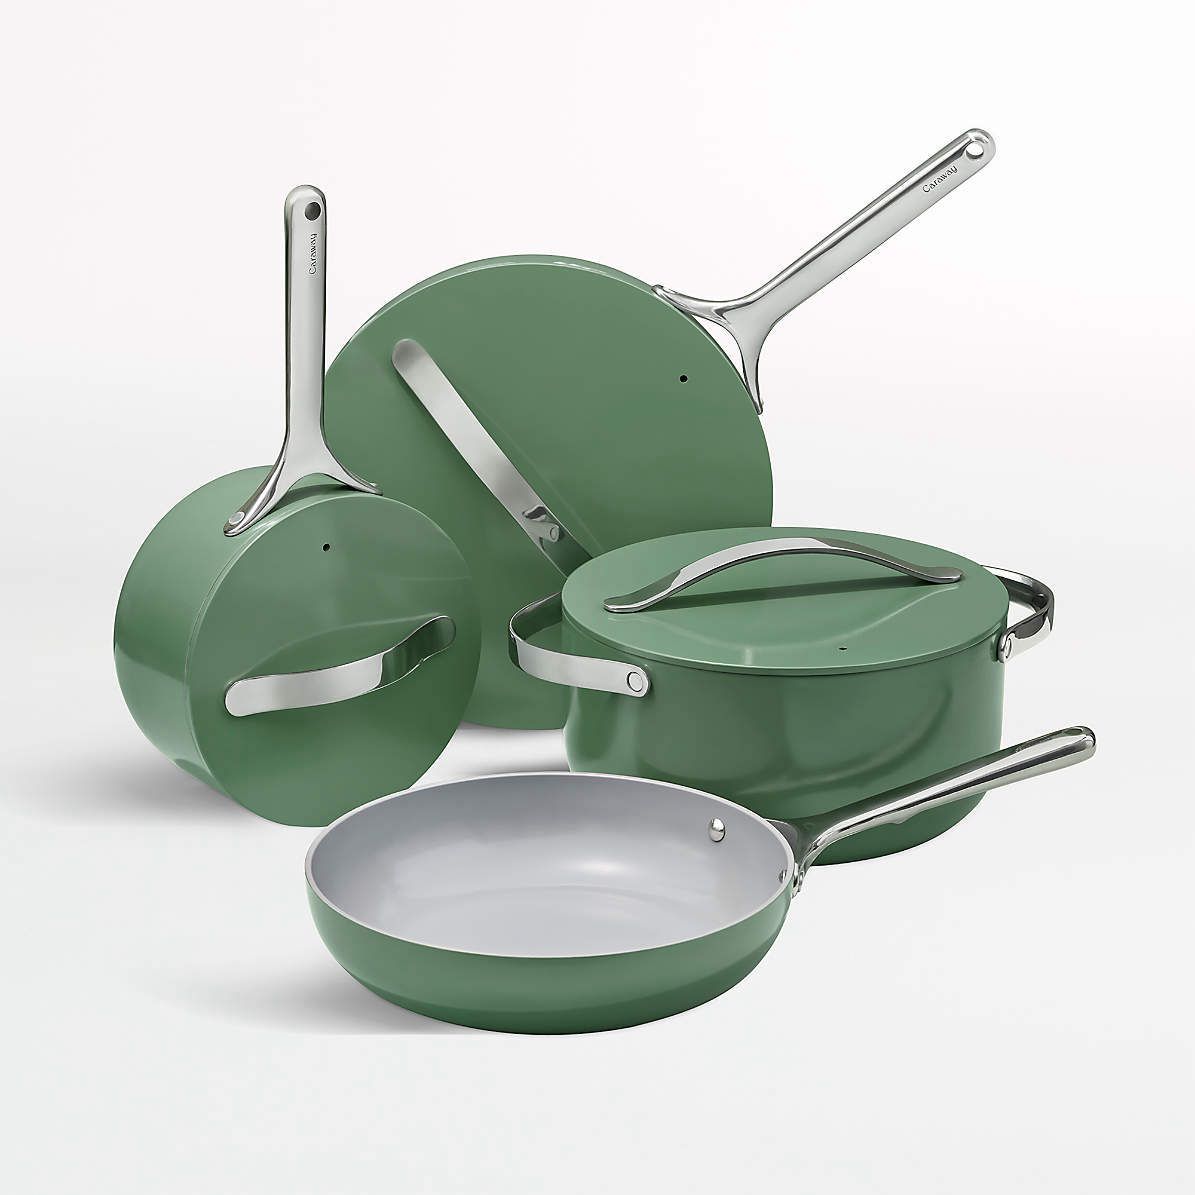 Caraway Cookware Set, $395; carawayhome.com https://www.carawayhome.com/products/cookware-sets/?color=sage